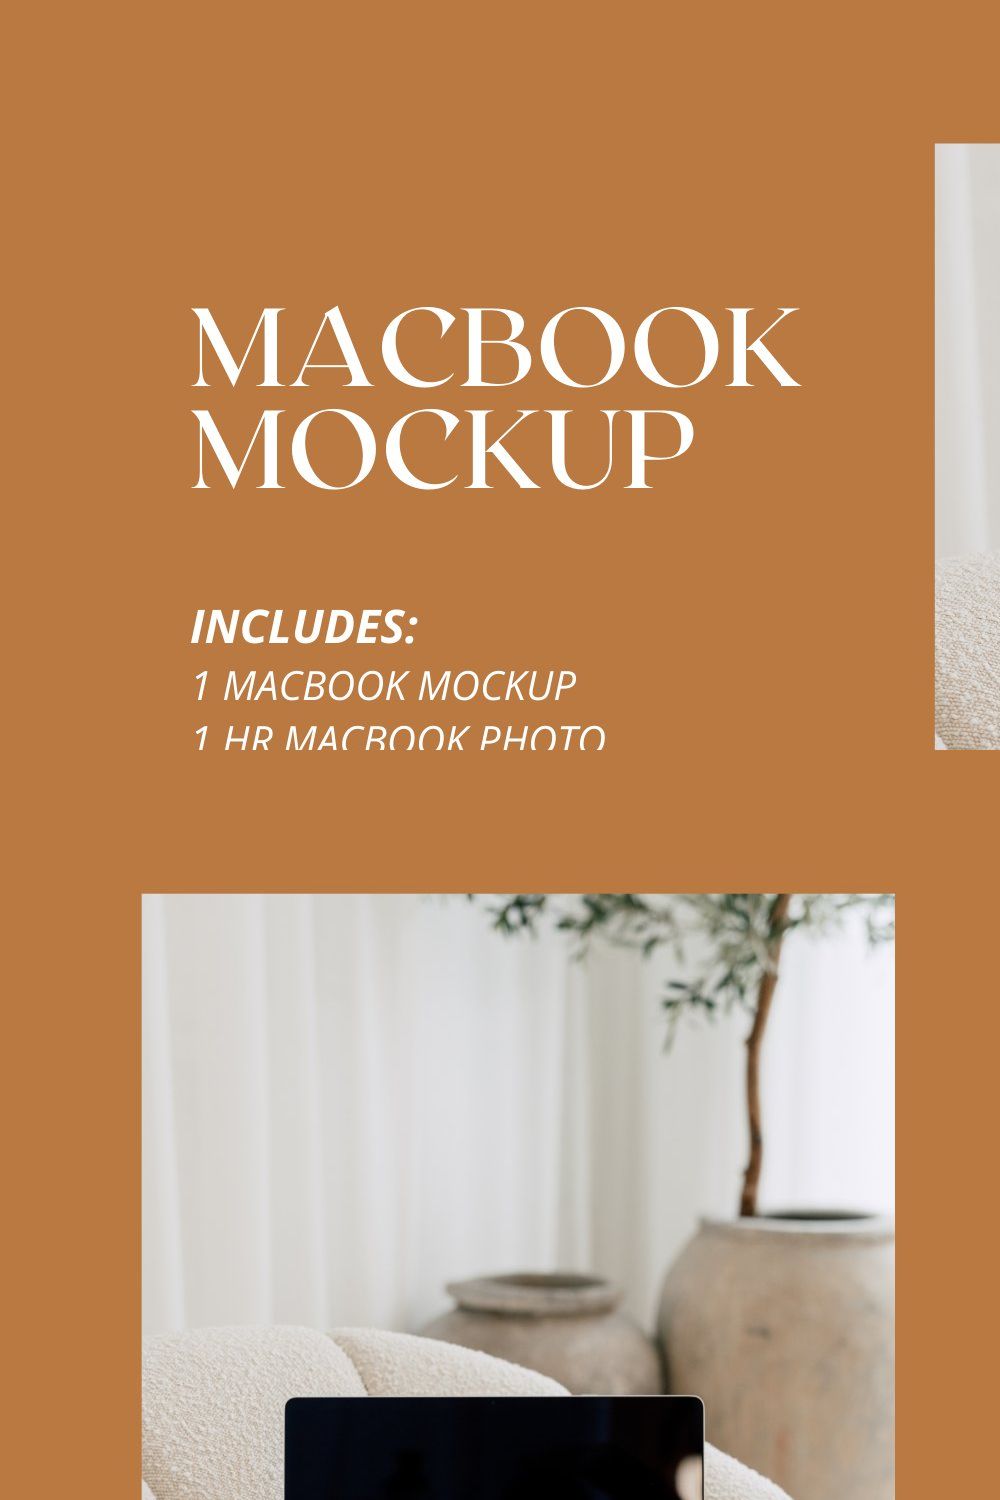 Macbook Mockup, TERRA 9 pinterest preview image.